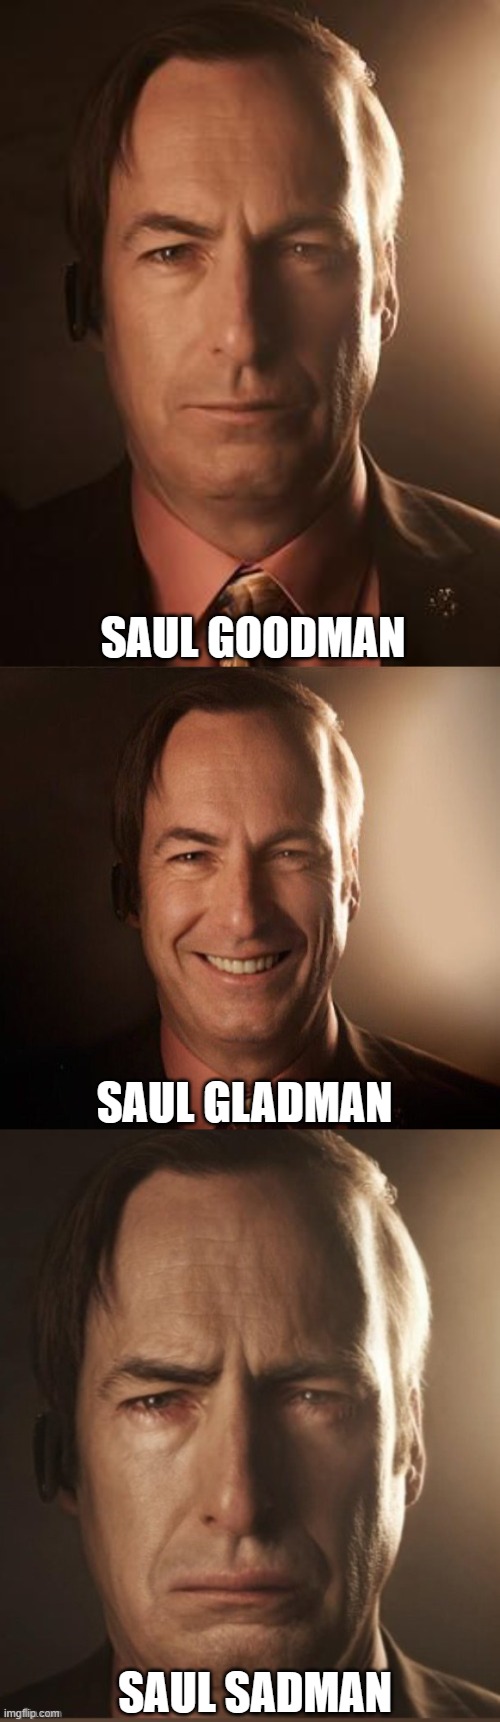 SAUL GOODMAN; SAUL GLADMAN; SAUL SADMAN | image tagged in saul goodman,saul bestman,saul sadman | made w/ Imgflip meme maker